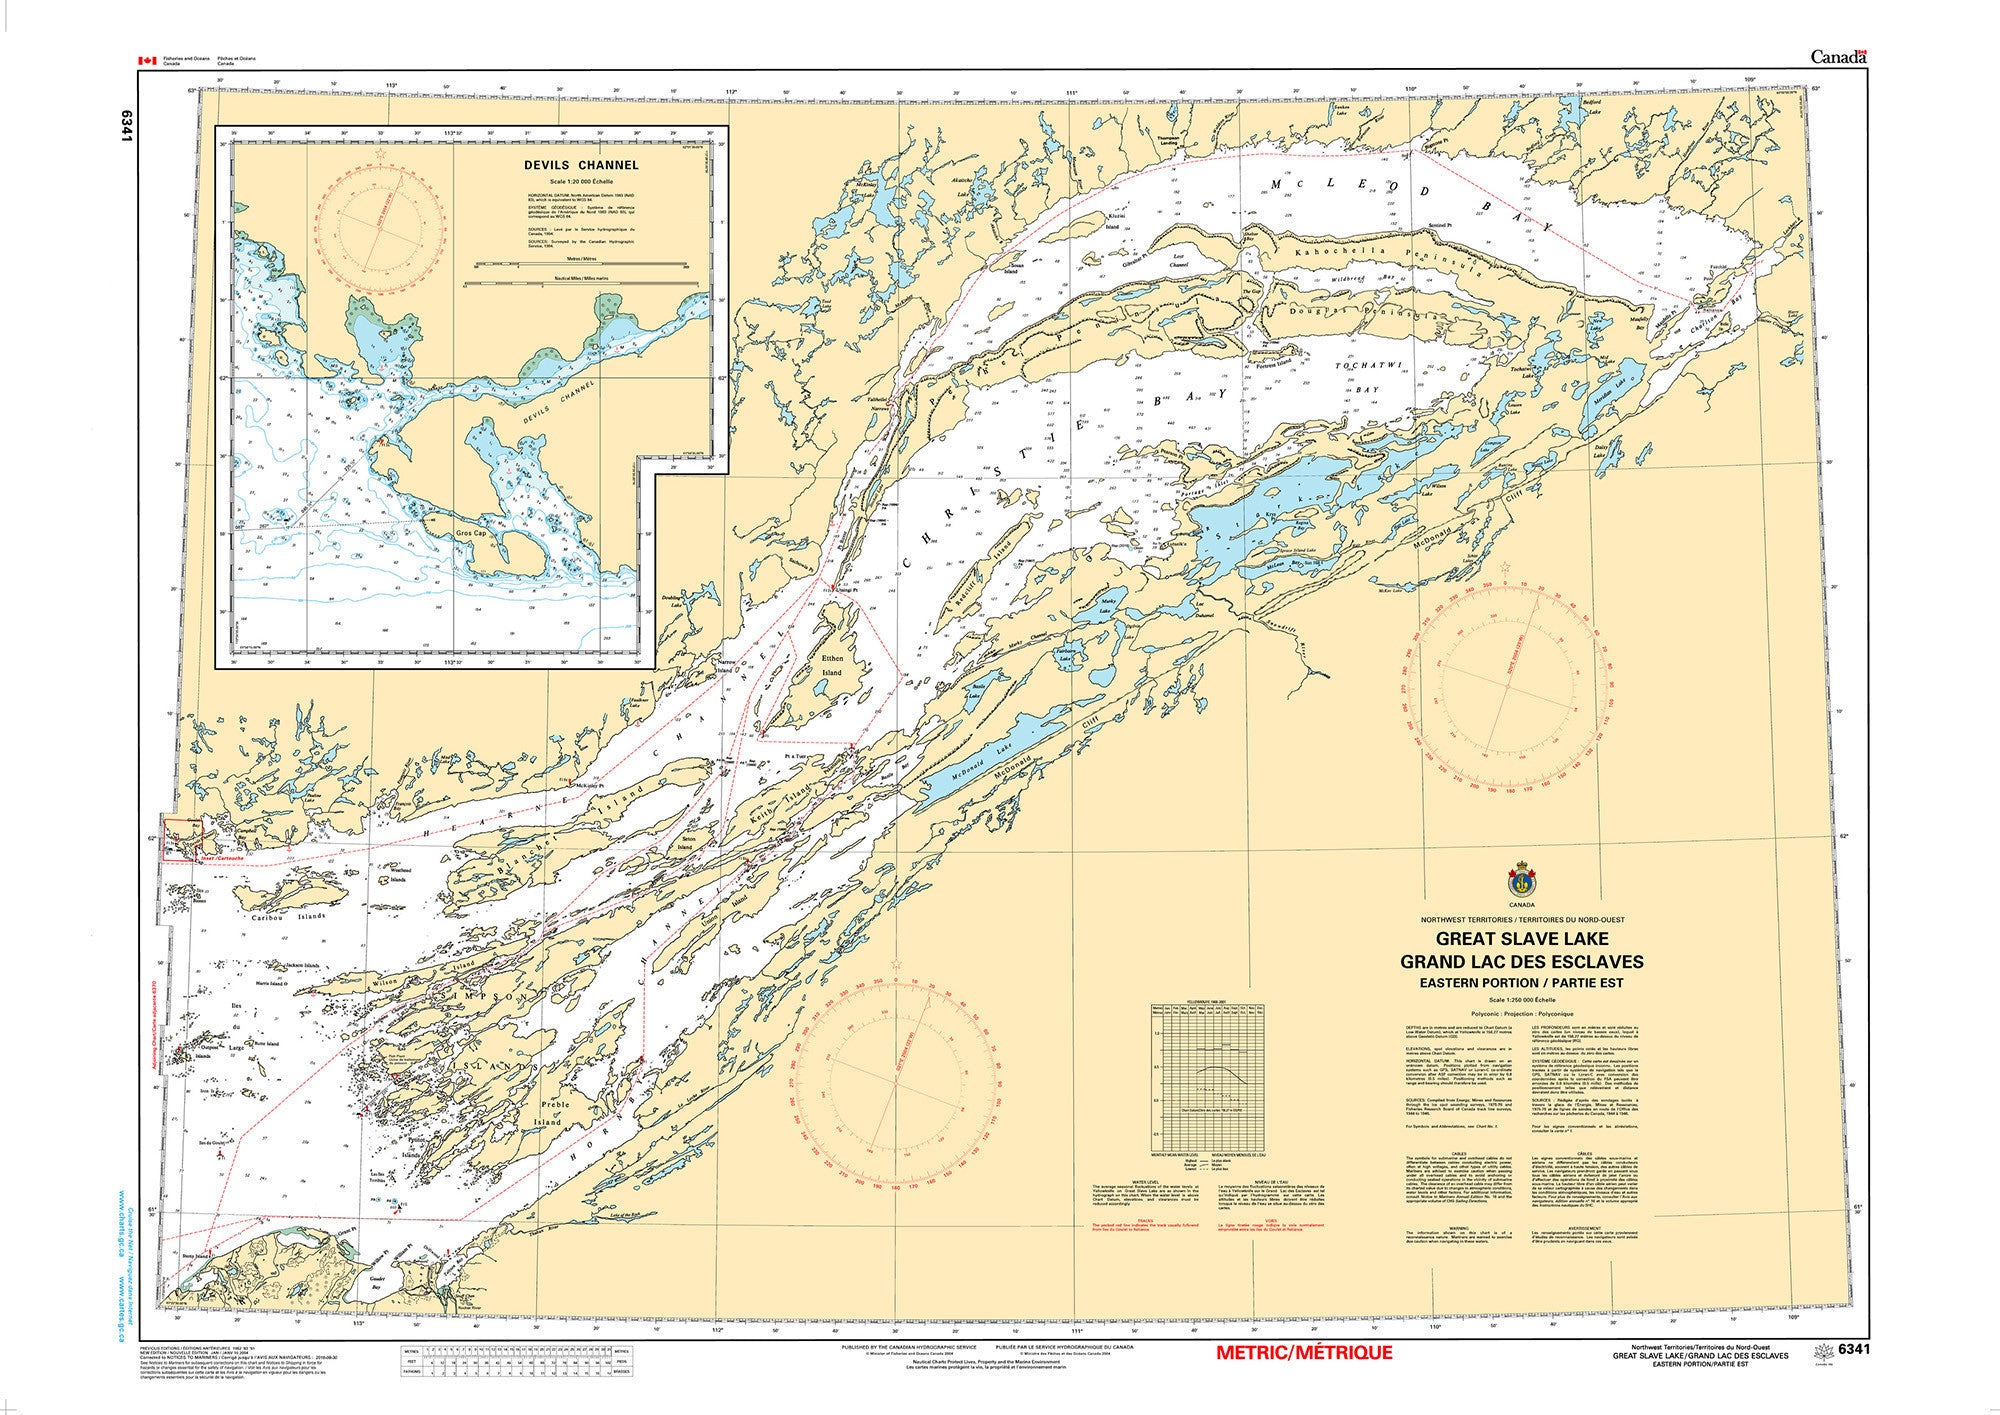 Canadian Hydrographic Service Nautical Chart CHS6341: Great Slave Lake/Grand lac des Esclaves, Eastern Portion/Partie est